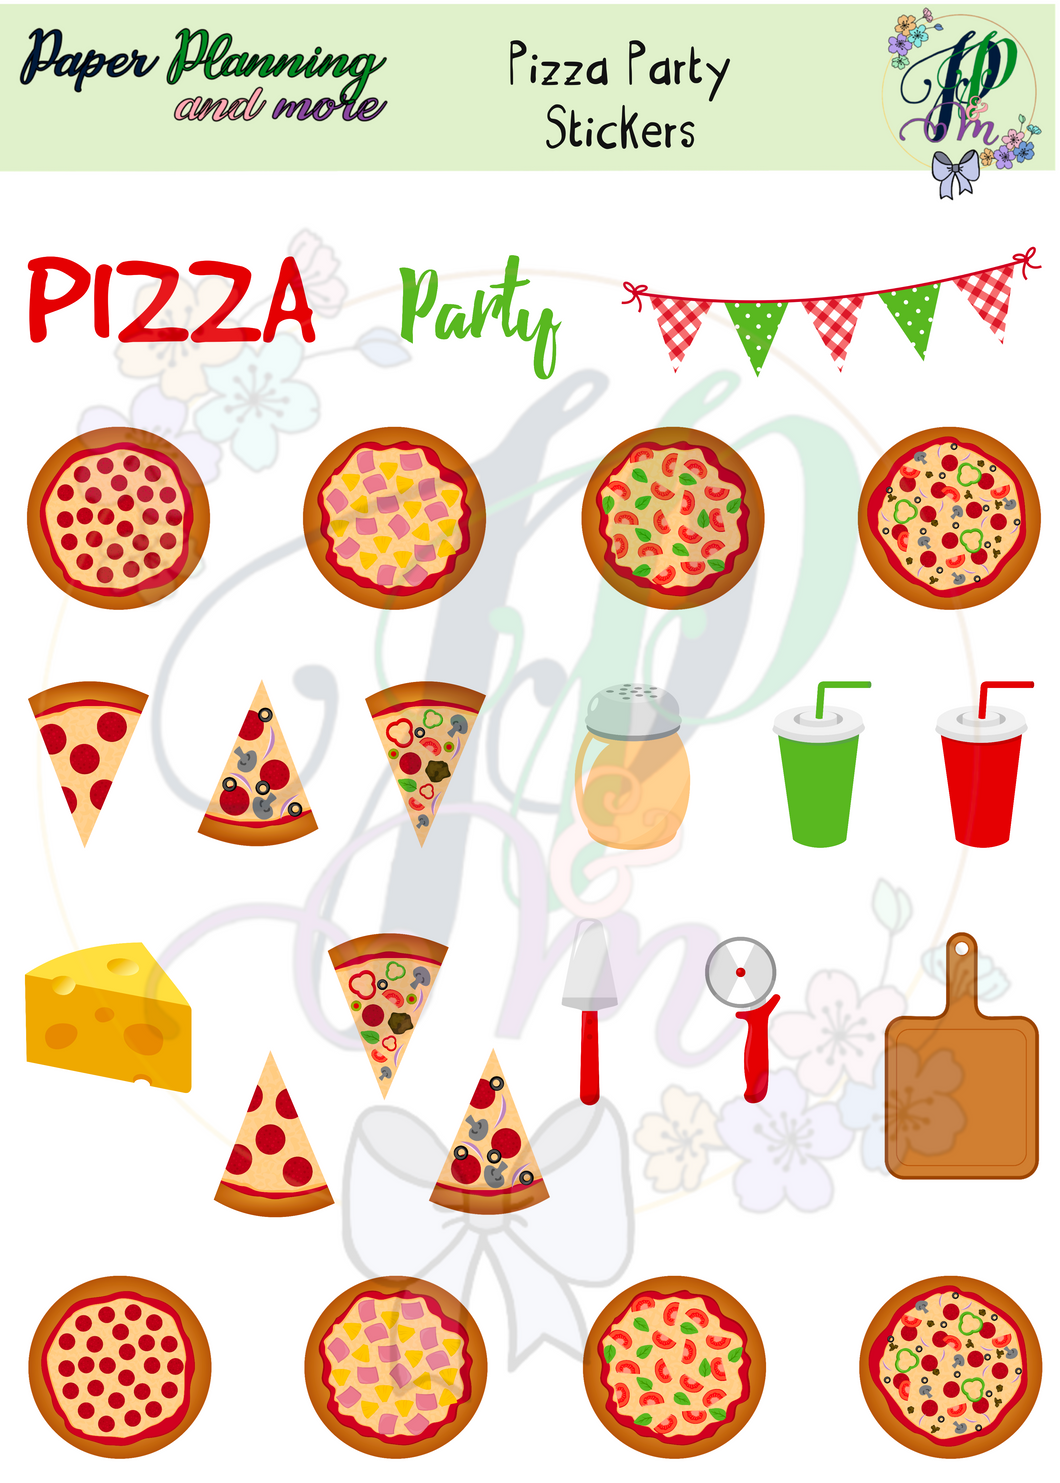 Pizza Party Sticker Sheet